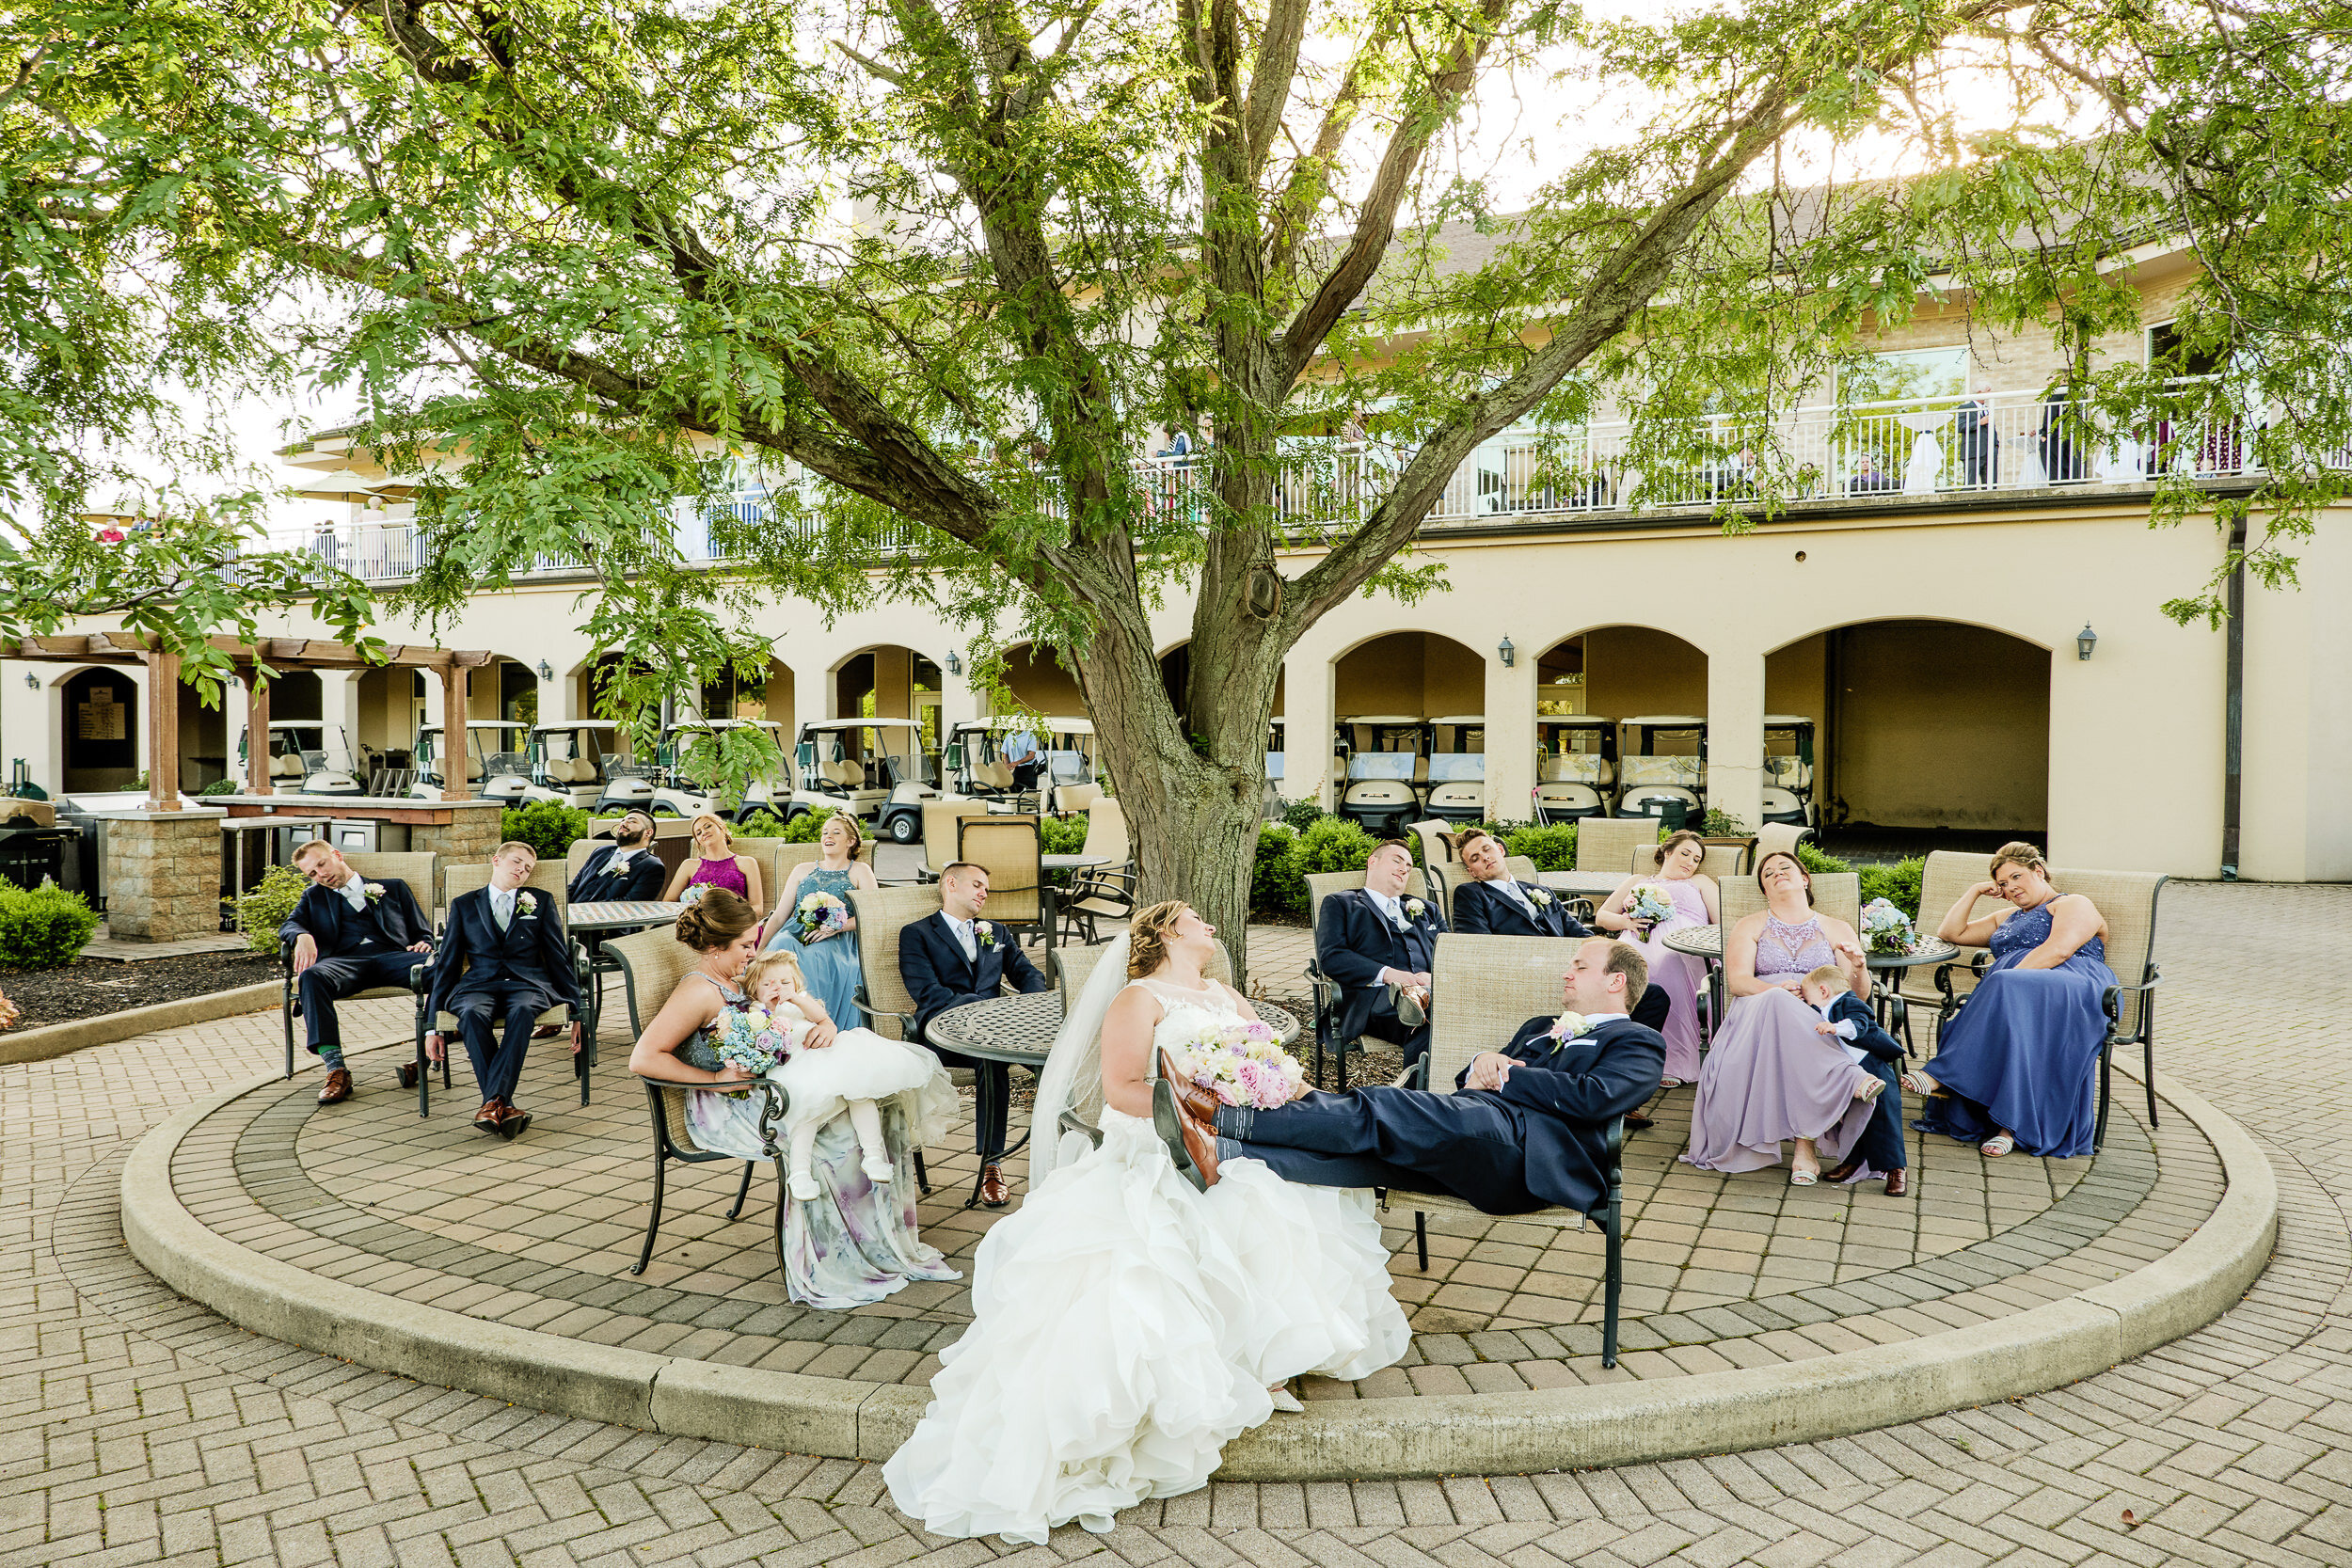 Sand Creek Country Club Wedding Venue - Northwest Indiana Wedding Photographer Region Weddings